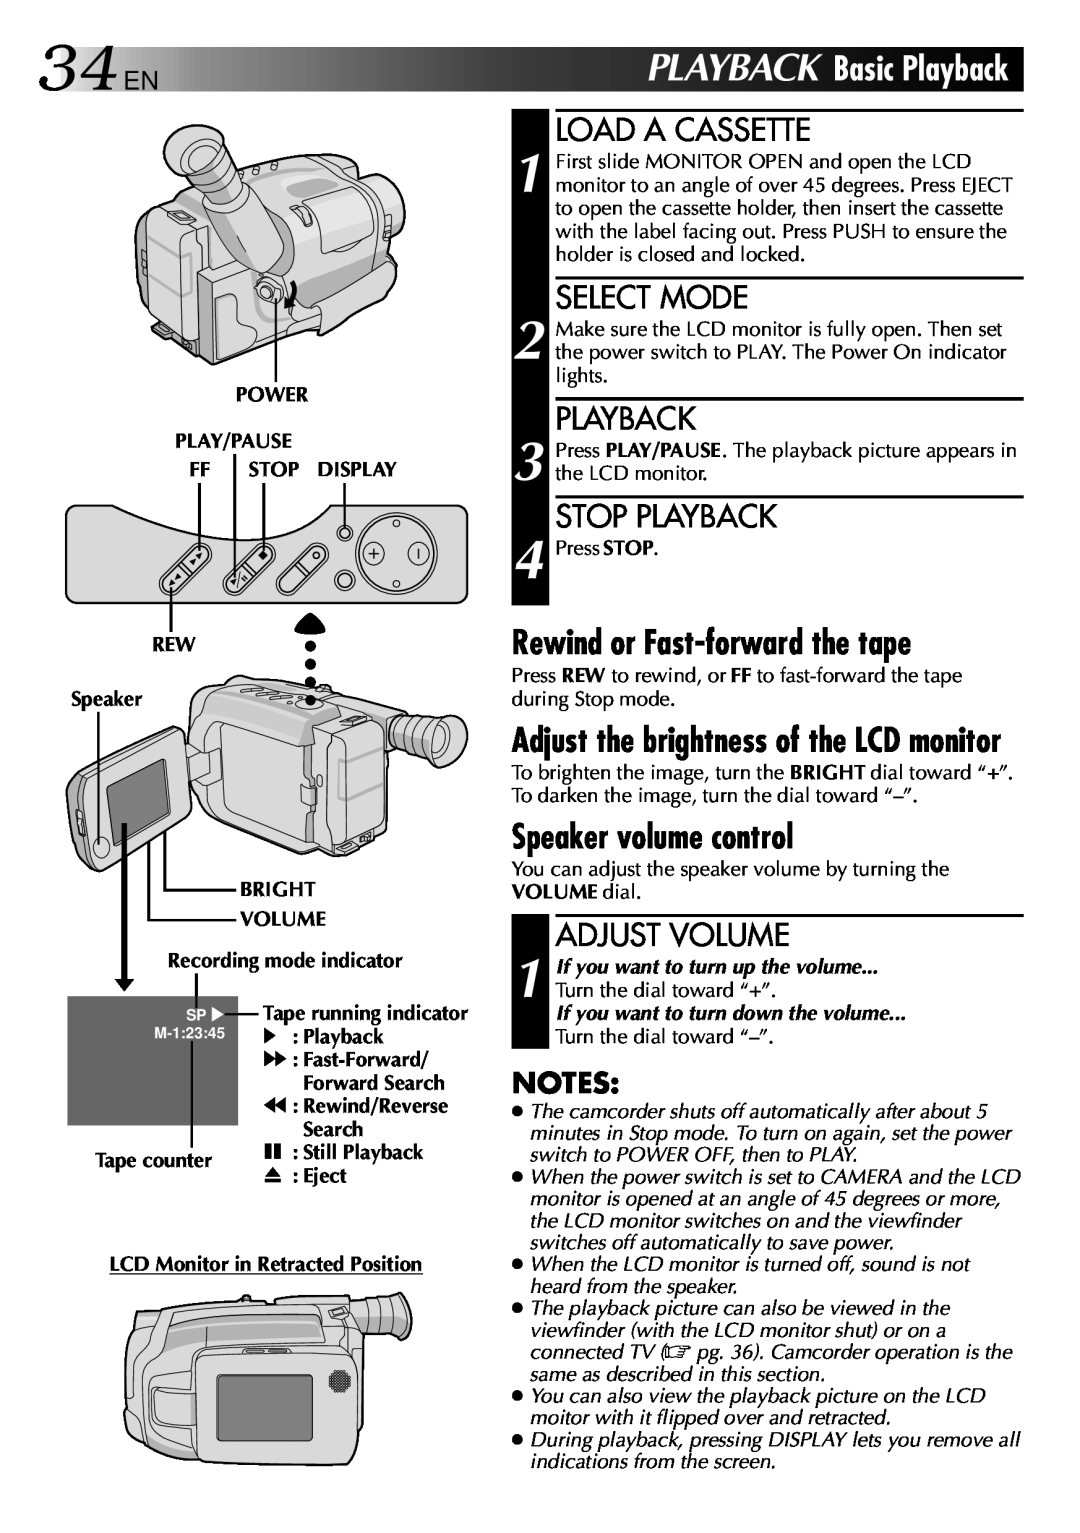 JVC GR-AXM70 manual 34EN PLAYBACK, BasicPlayback, Rewind or Fast-forward the tape, Speaker volume control, Stop Playback 